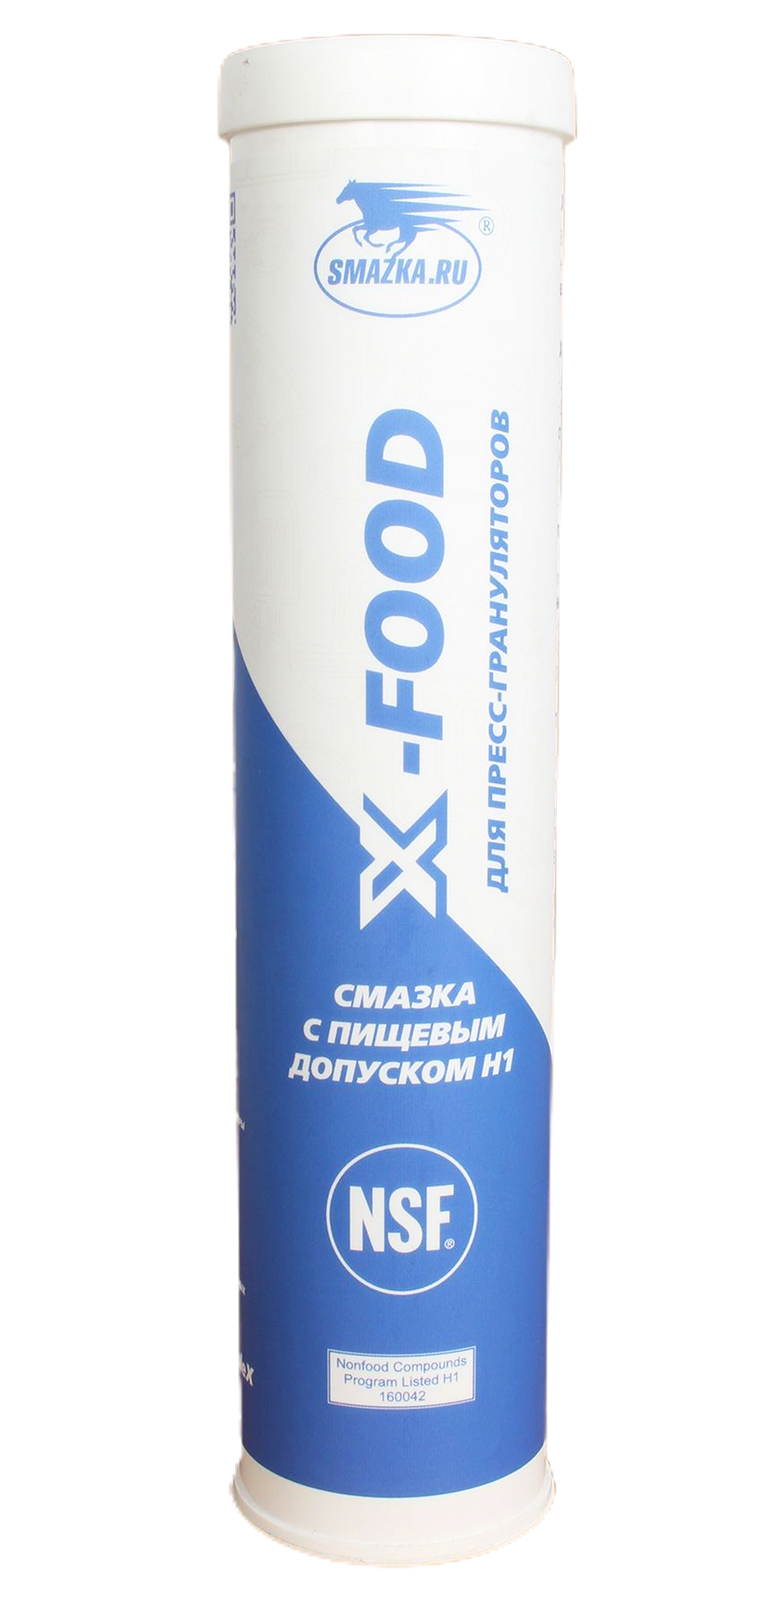 Смазка ВМПАВТО 1026 для пресс-грануляров X-Food 3017-2 (NSF H1) 400мл картридж фотография №1